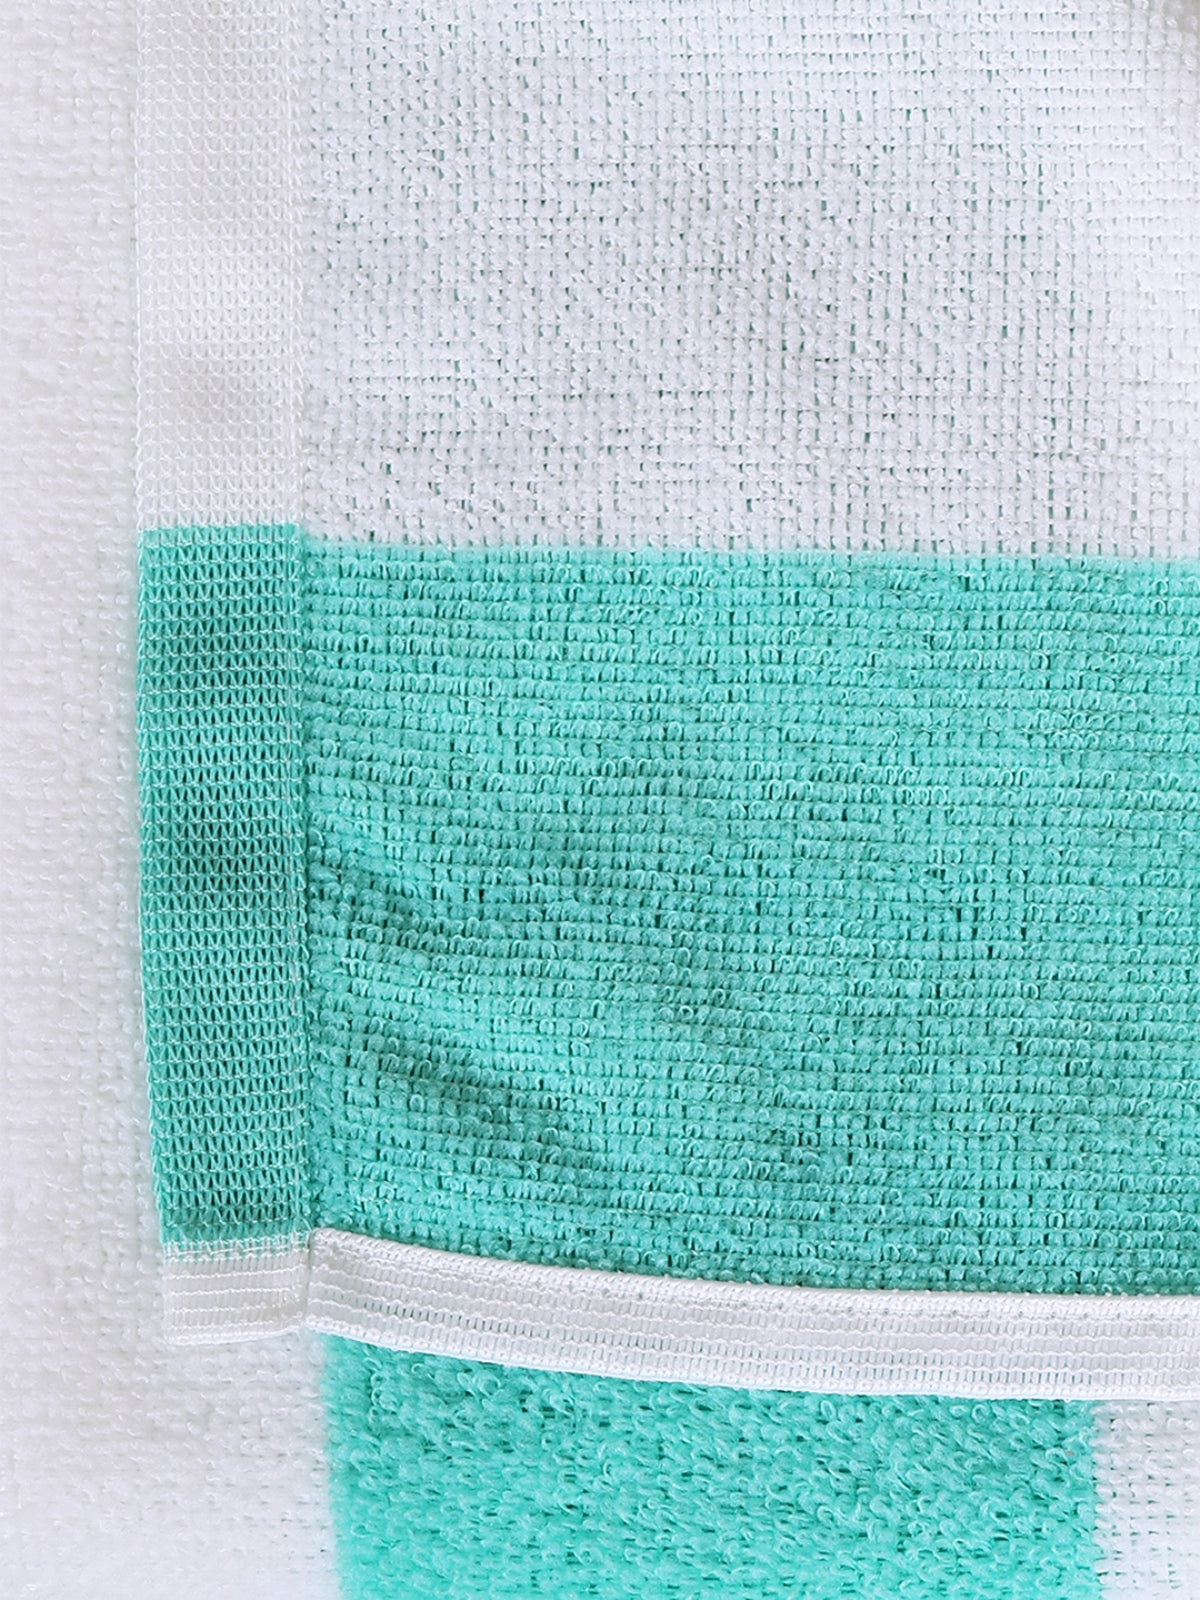 Green Stripes Patterned Microfiber Towel